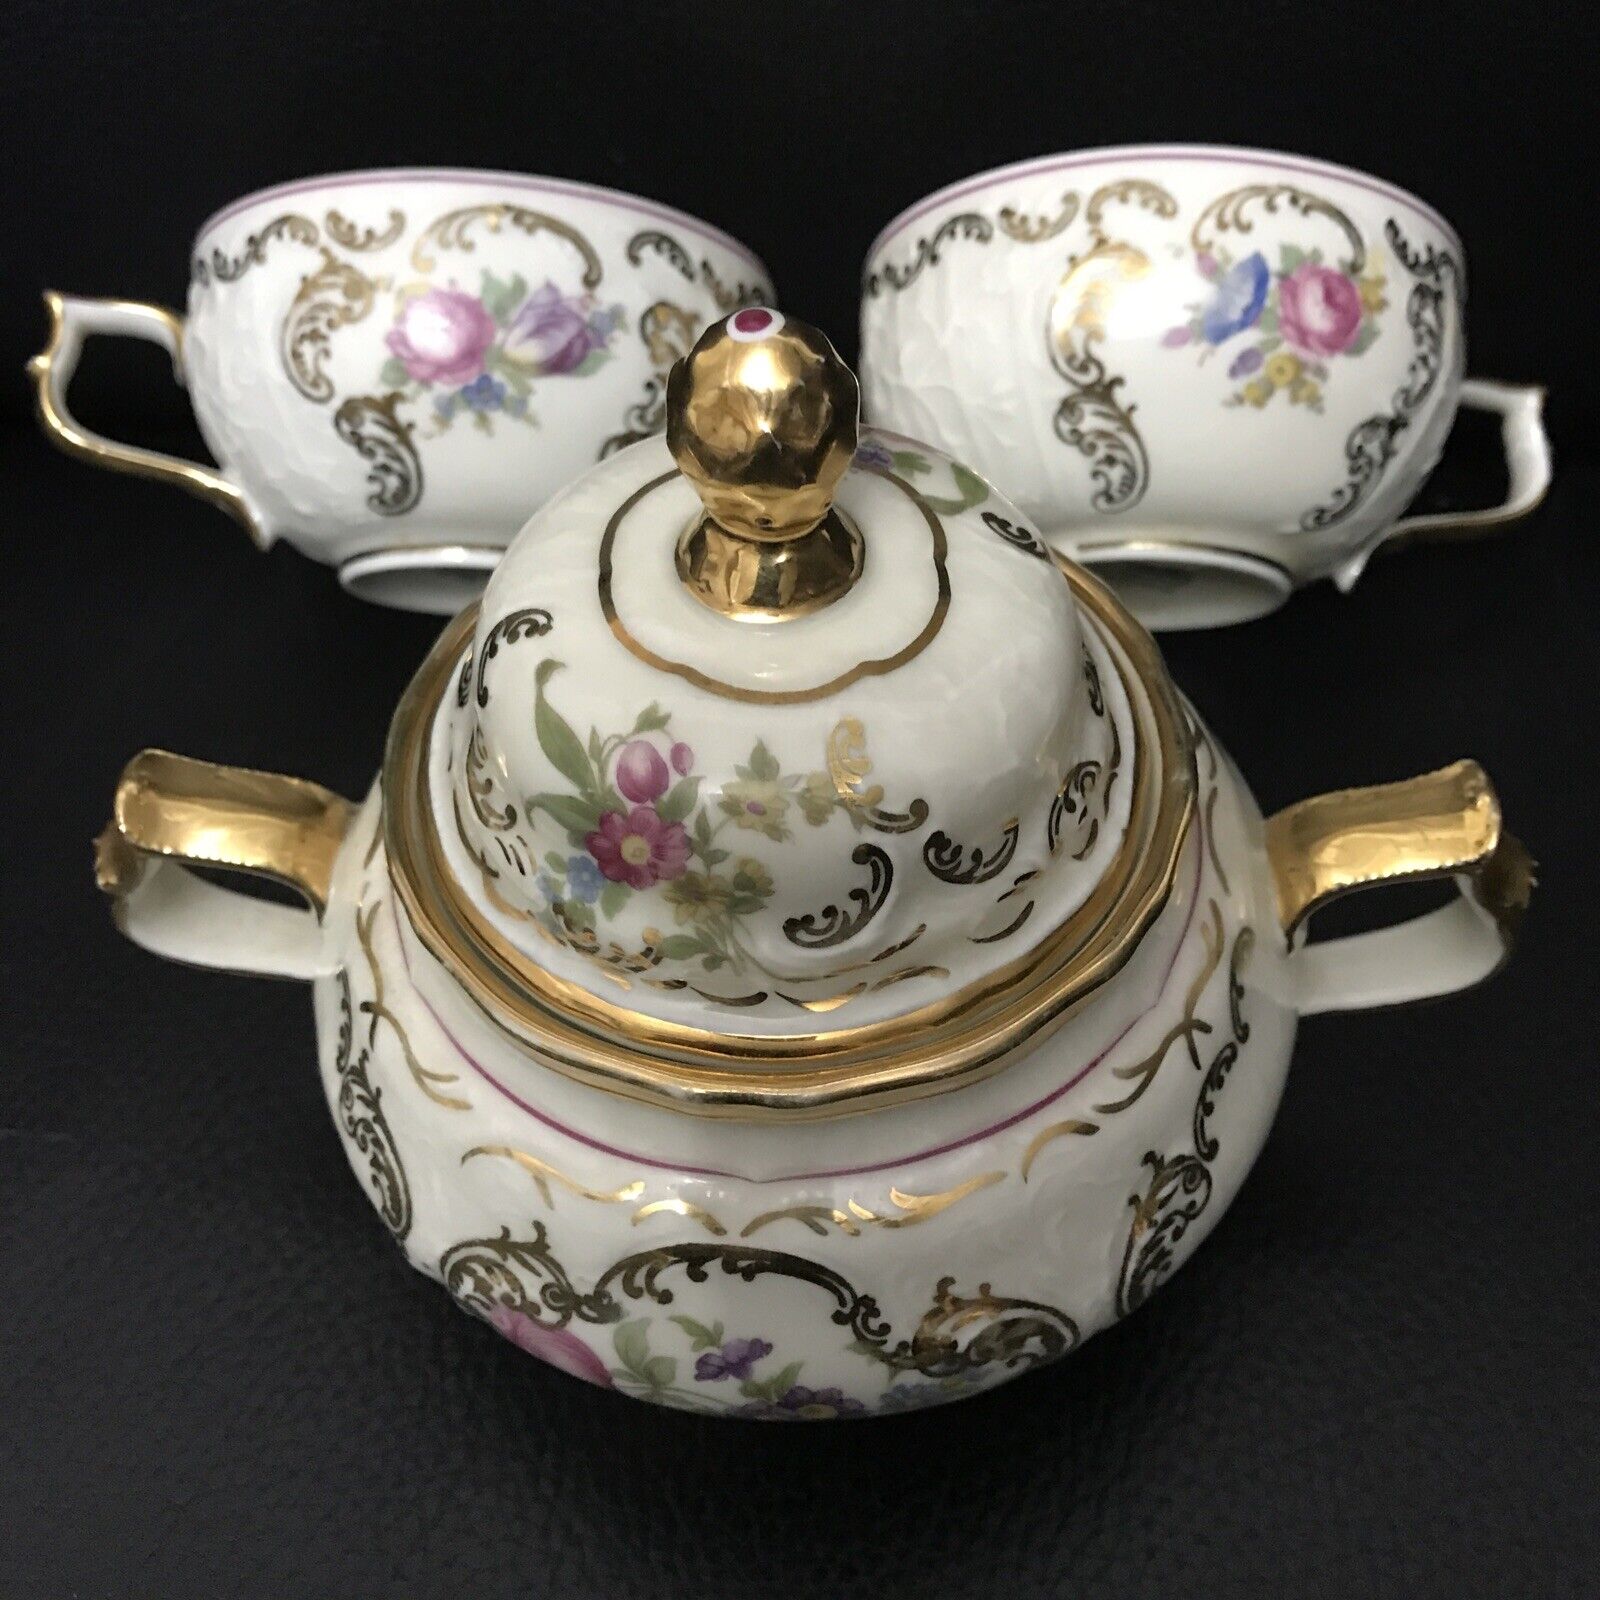 Rosenthal Sanssouci Diplomat Germany Sugar bowl with lid, 2 Tea Cups. Mint